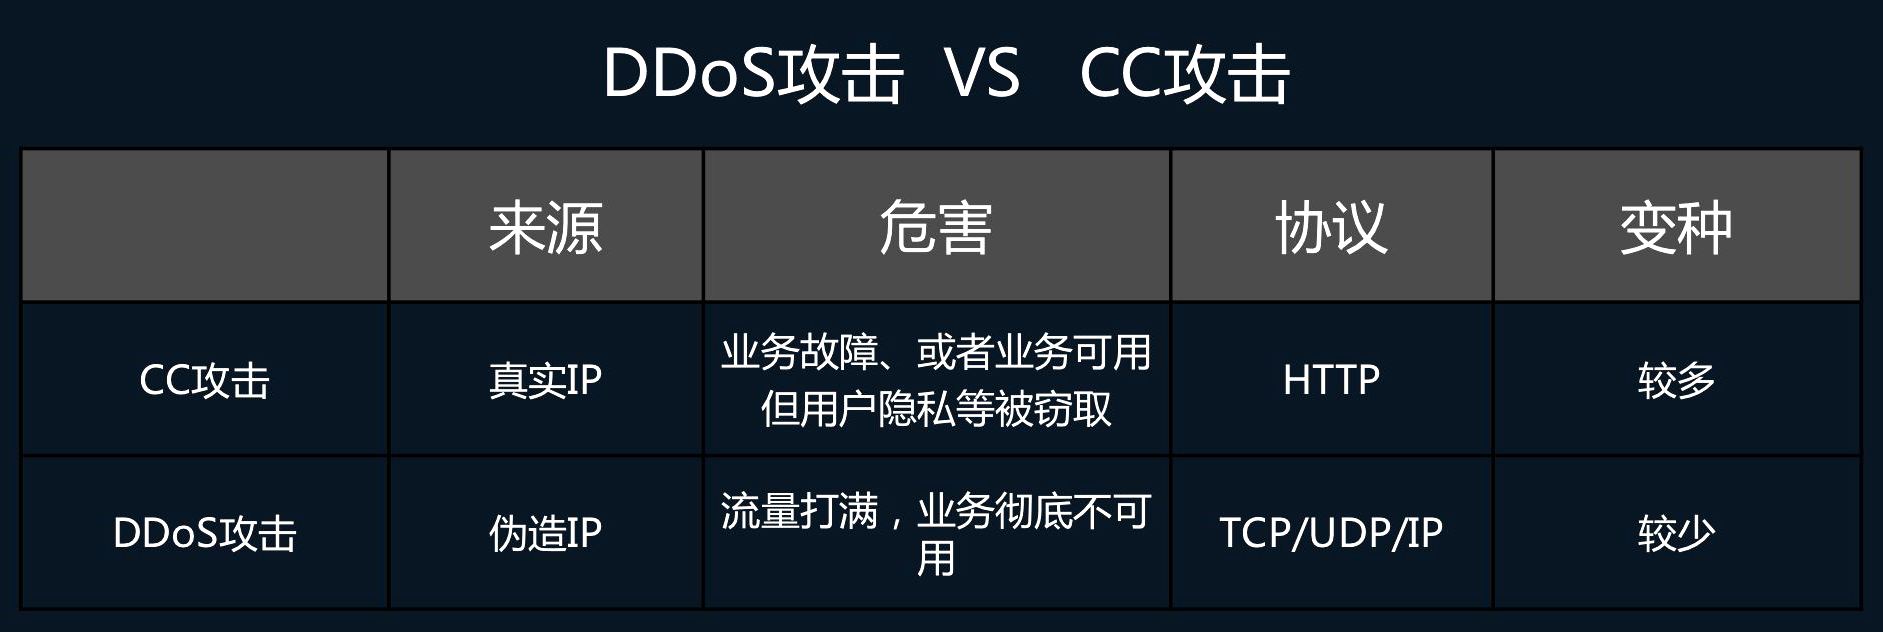 cc攻击和ddos攻击的区别